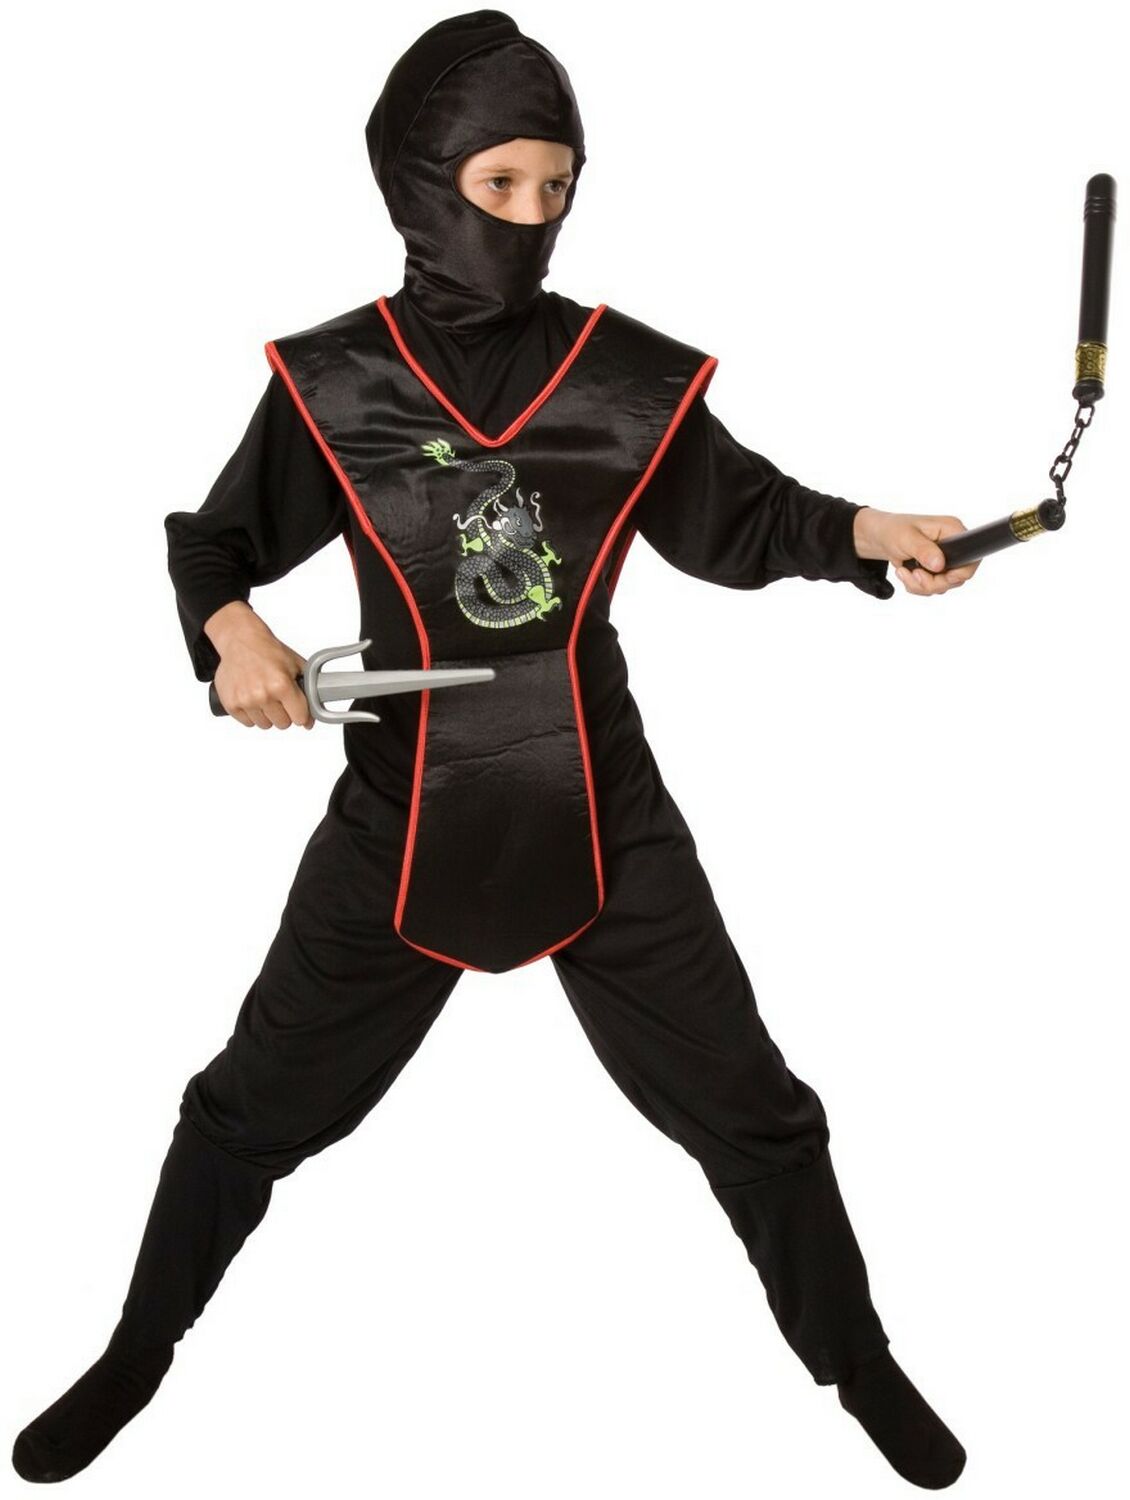 Ninja Child Costume Kit  20 89   Boys Costumes   Kids Halloween    